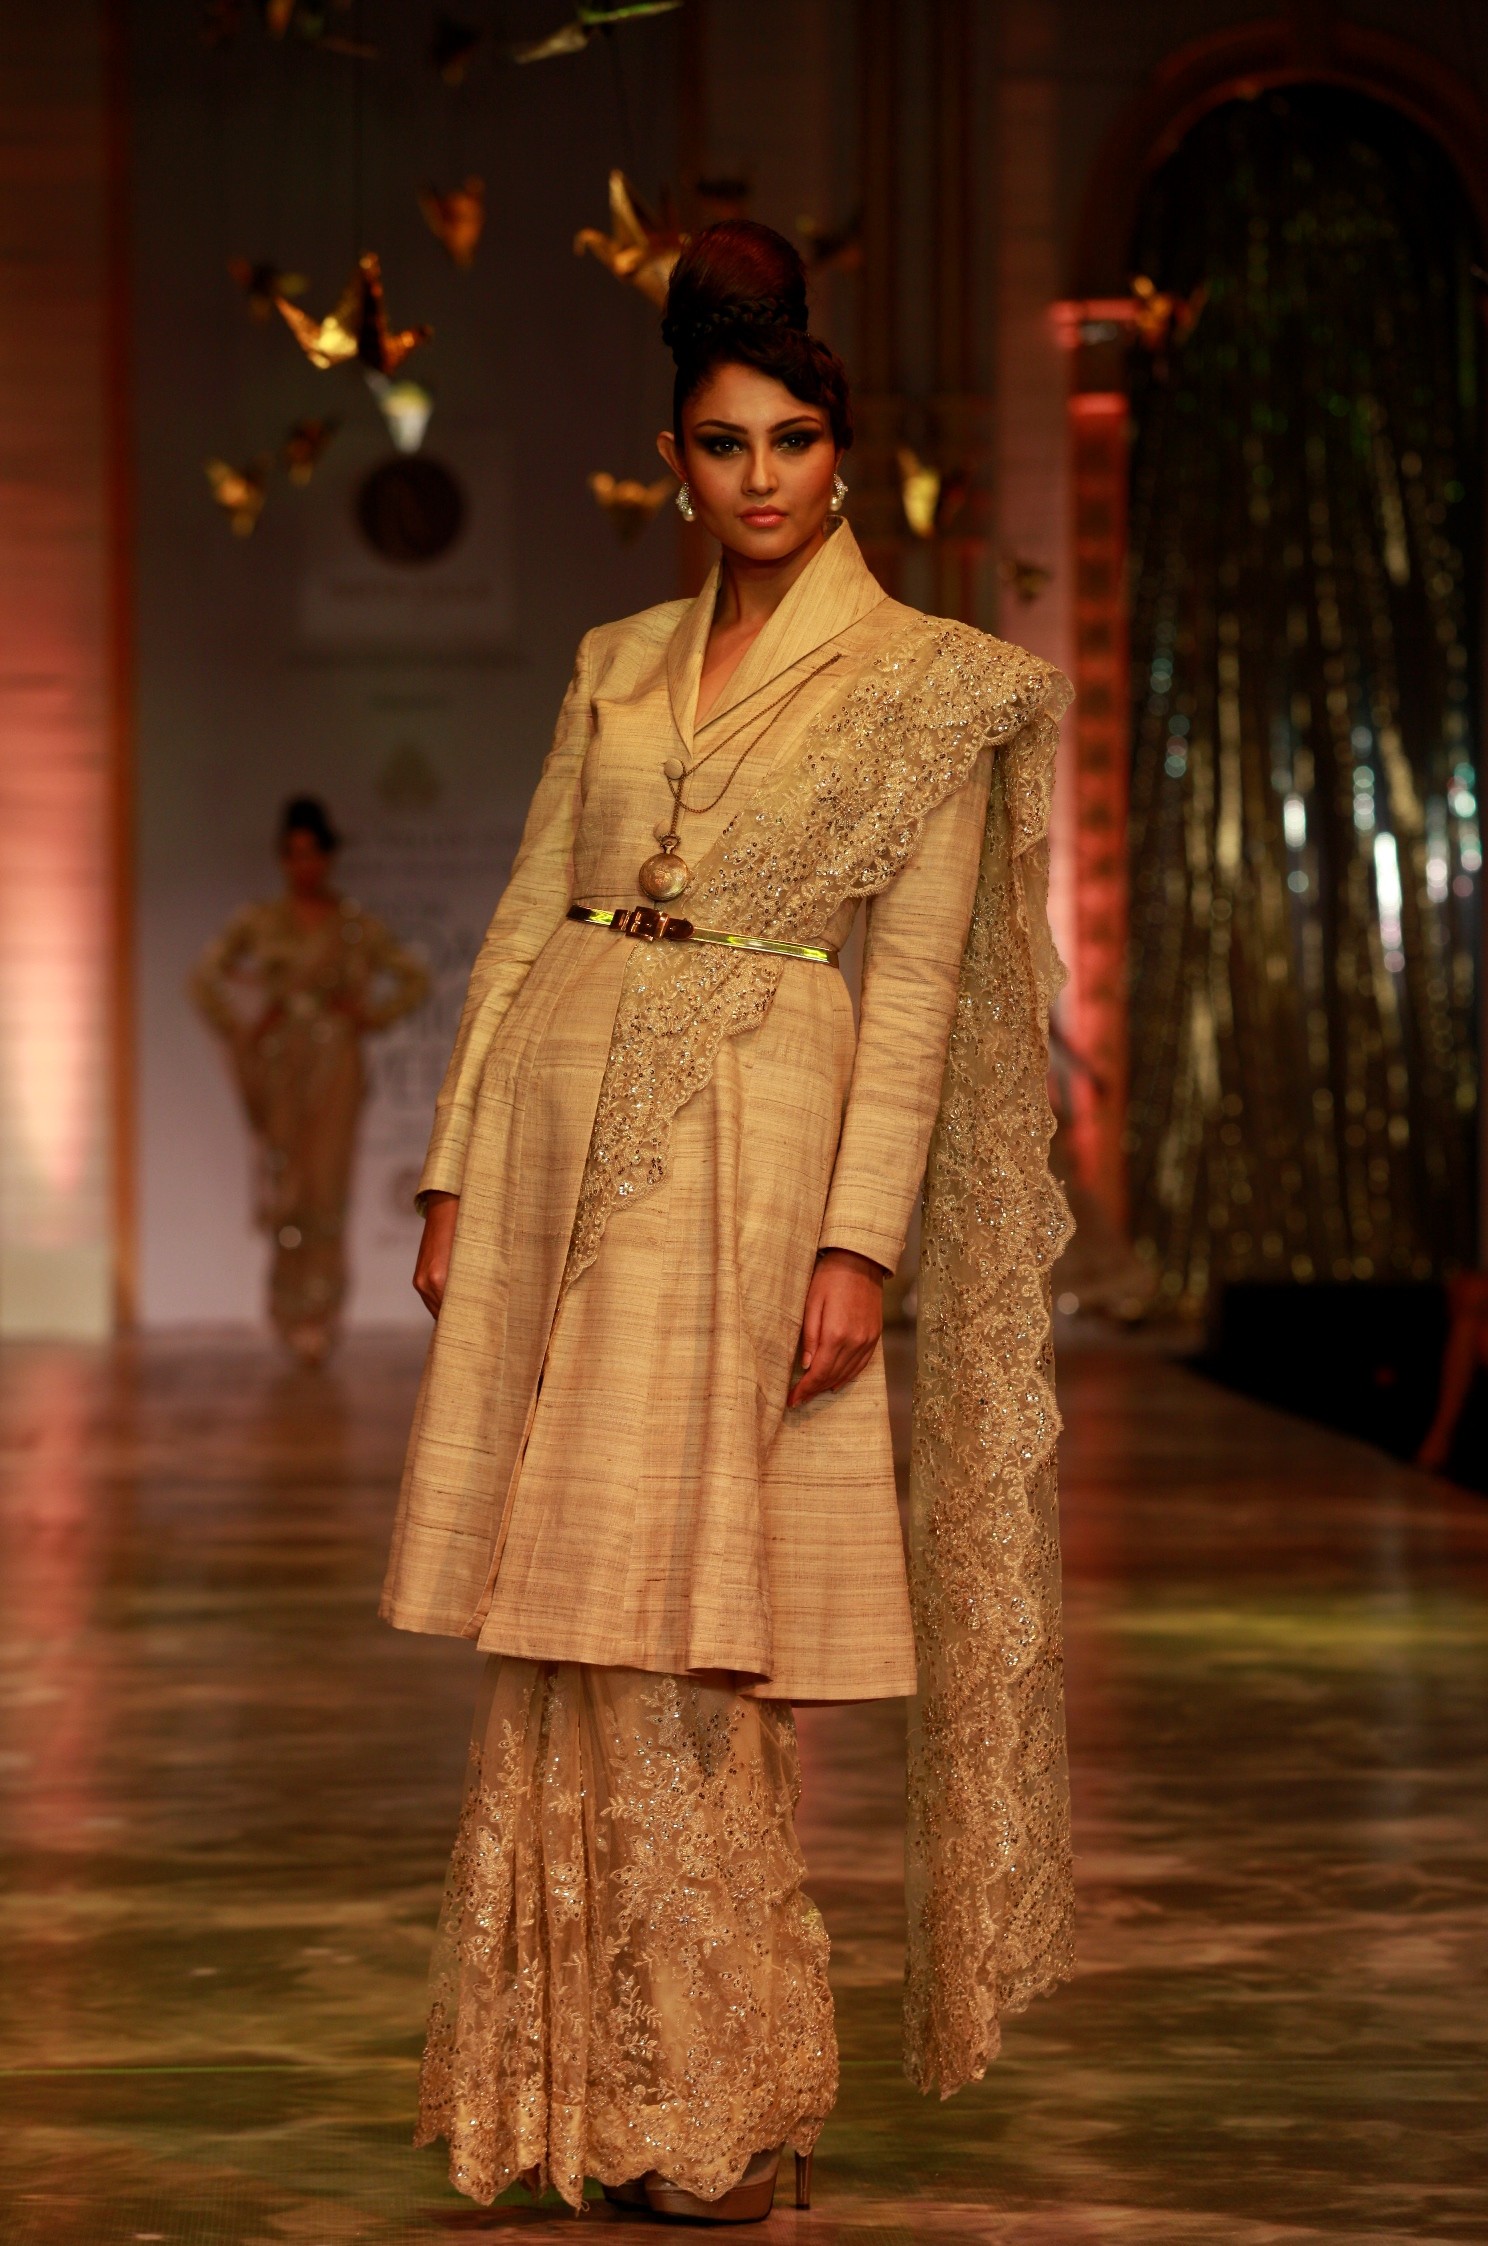 Seen at Aamby Valley India Bridal Fashion Week - Model walking for Neeta Lulla (7)